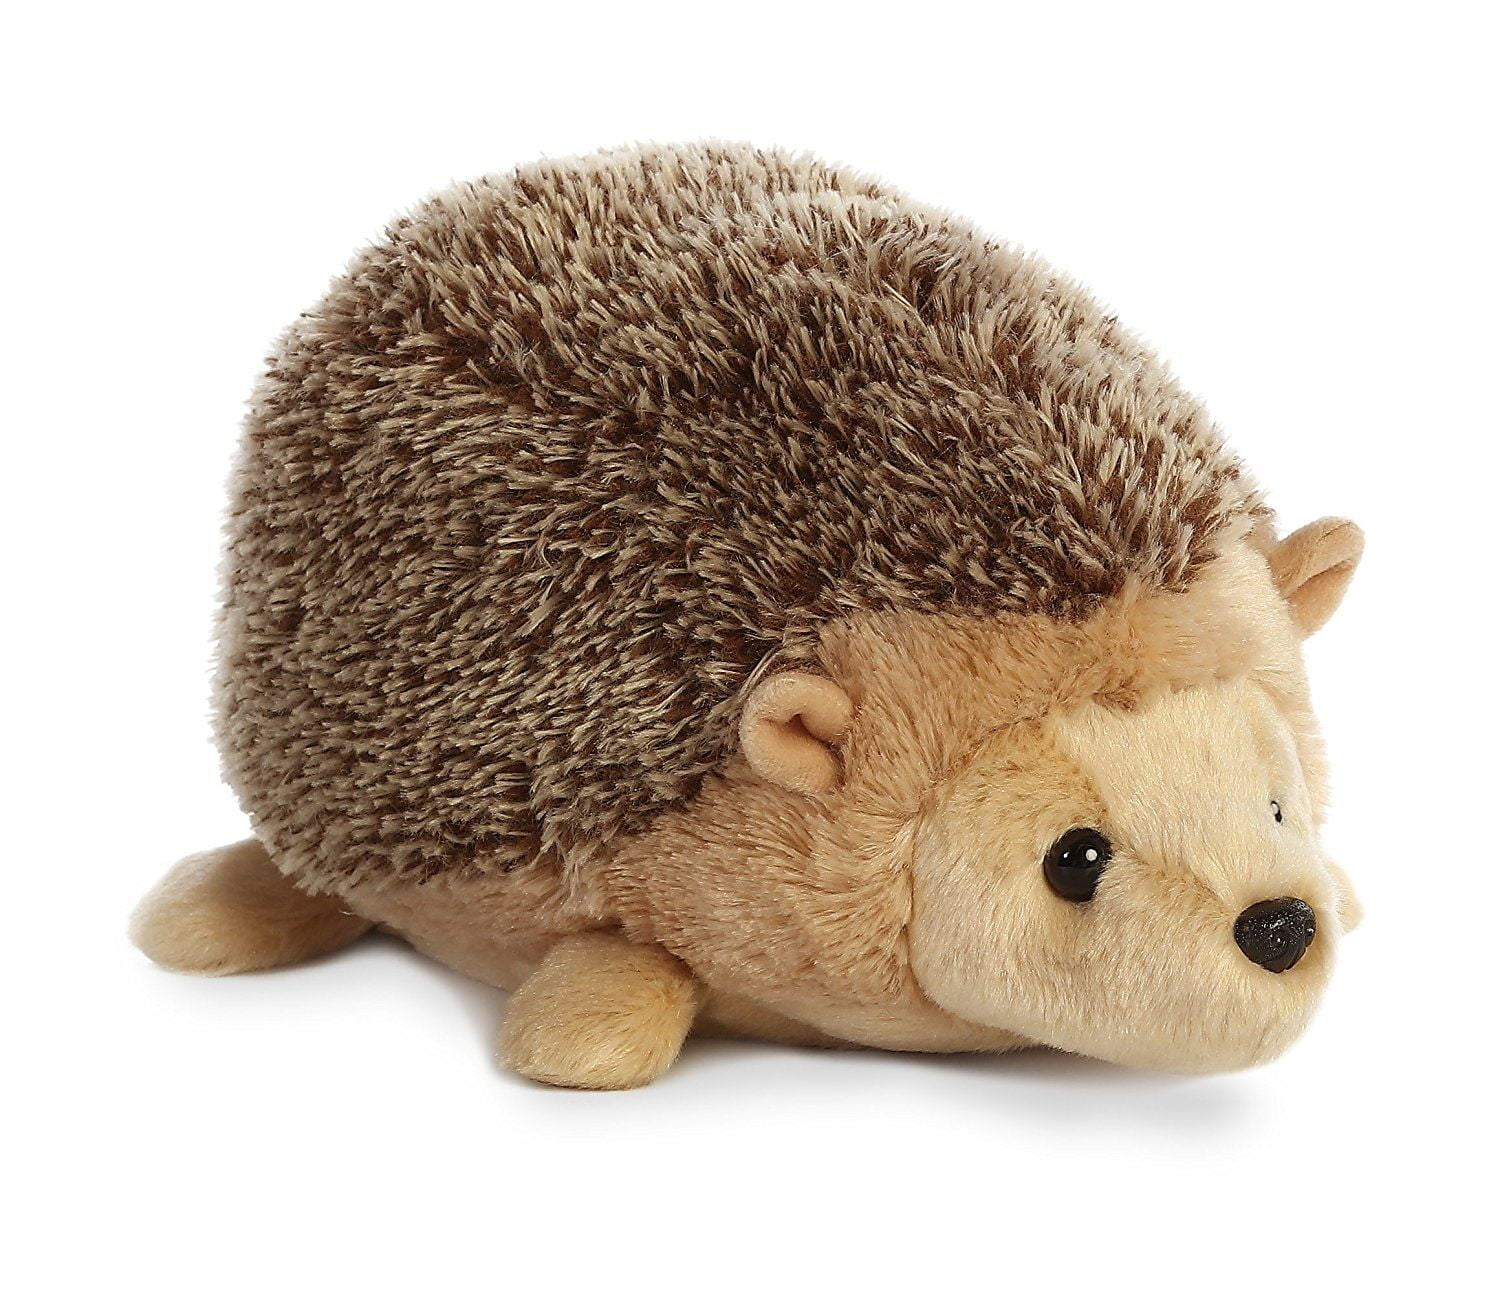 Hedgehog Flopsie 12 Inch - Stuffed Animal by Aurora Plush (31575) - Walmart.com1500 x 1316